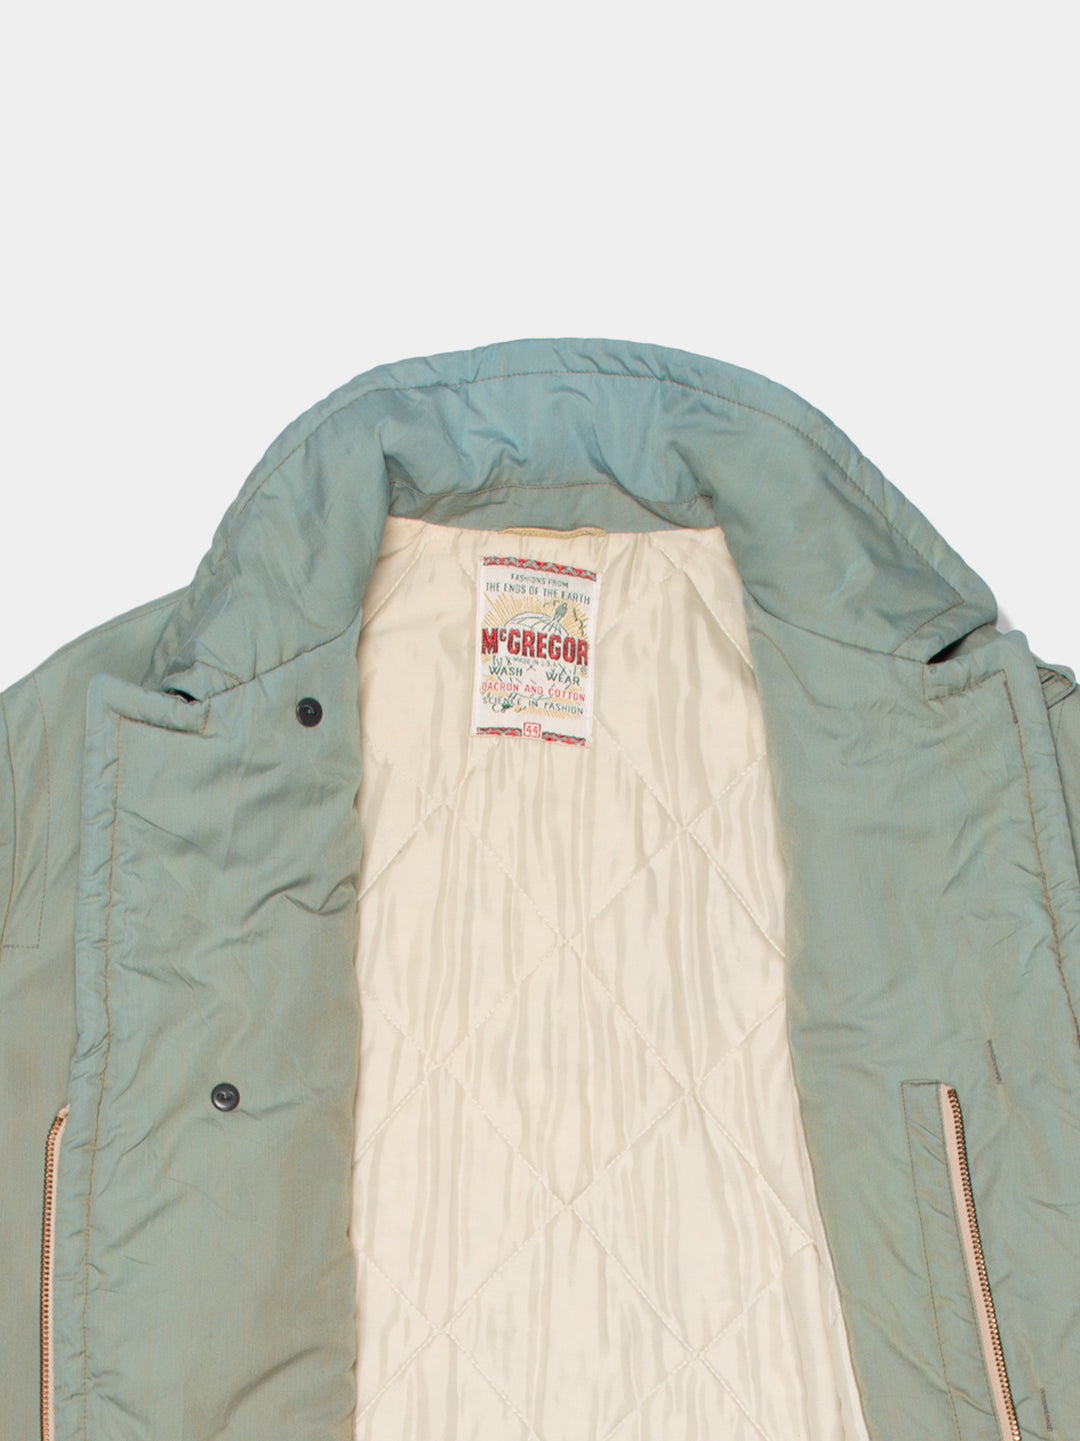 70s Mcgregor Iridescent Parka Jacket (XL)